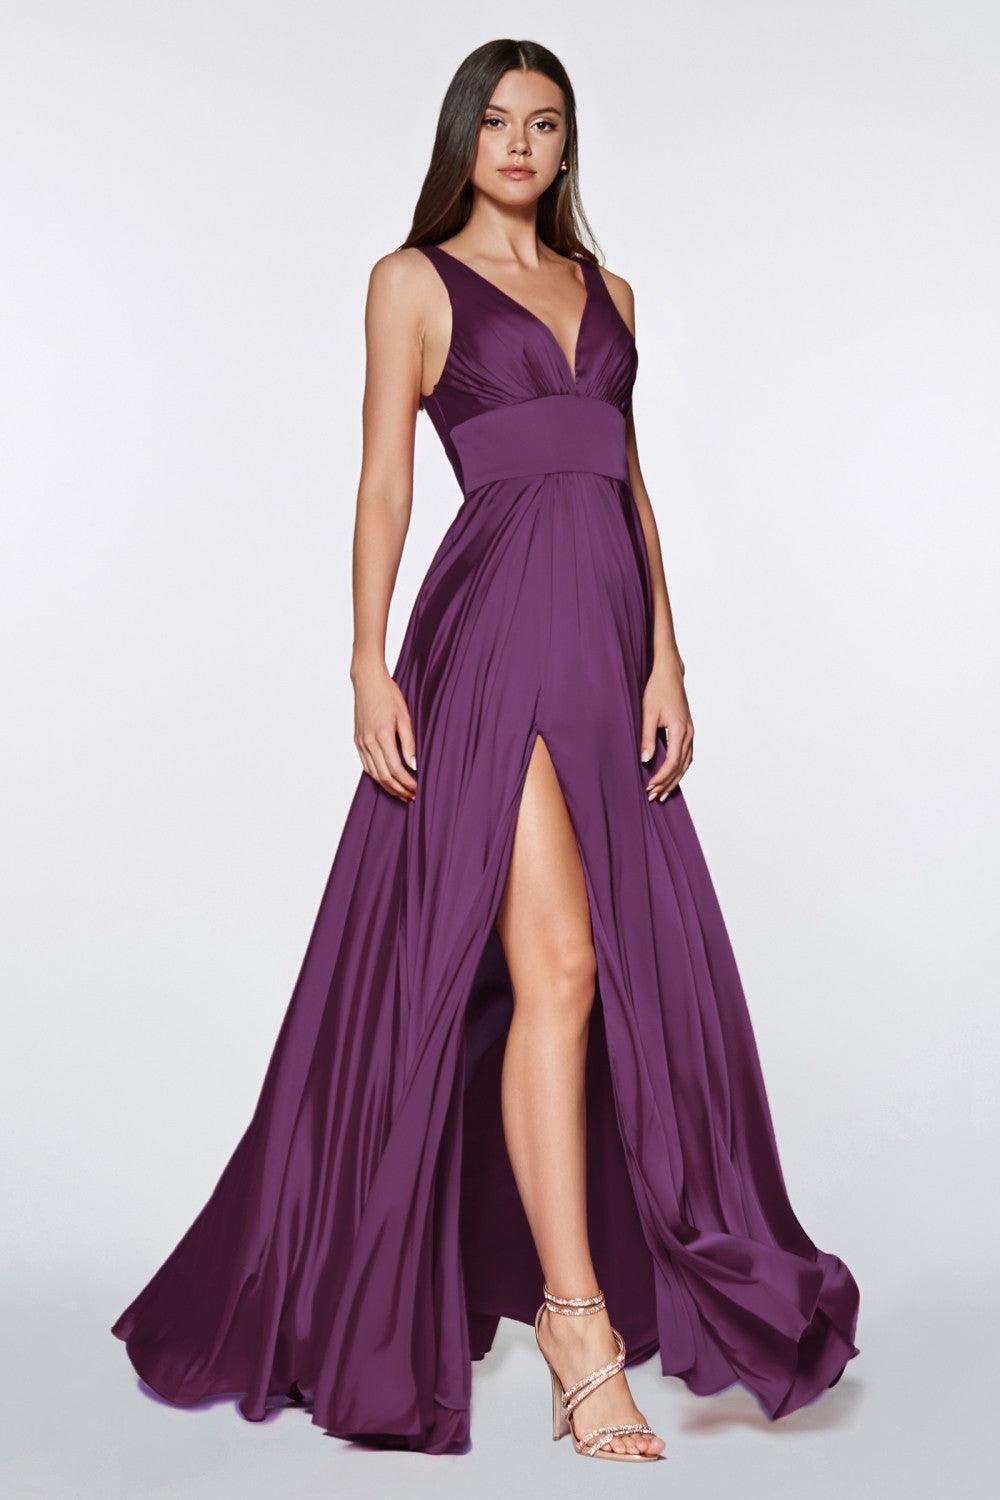 Satin Prom Long High Slit Dress - The Dress Outlet